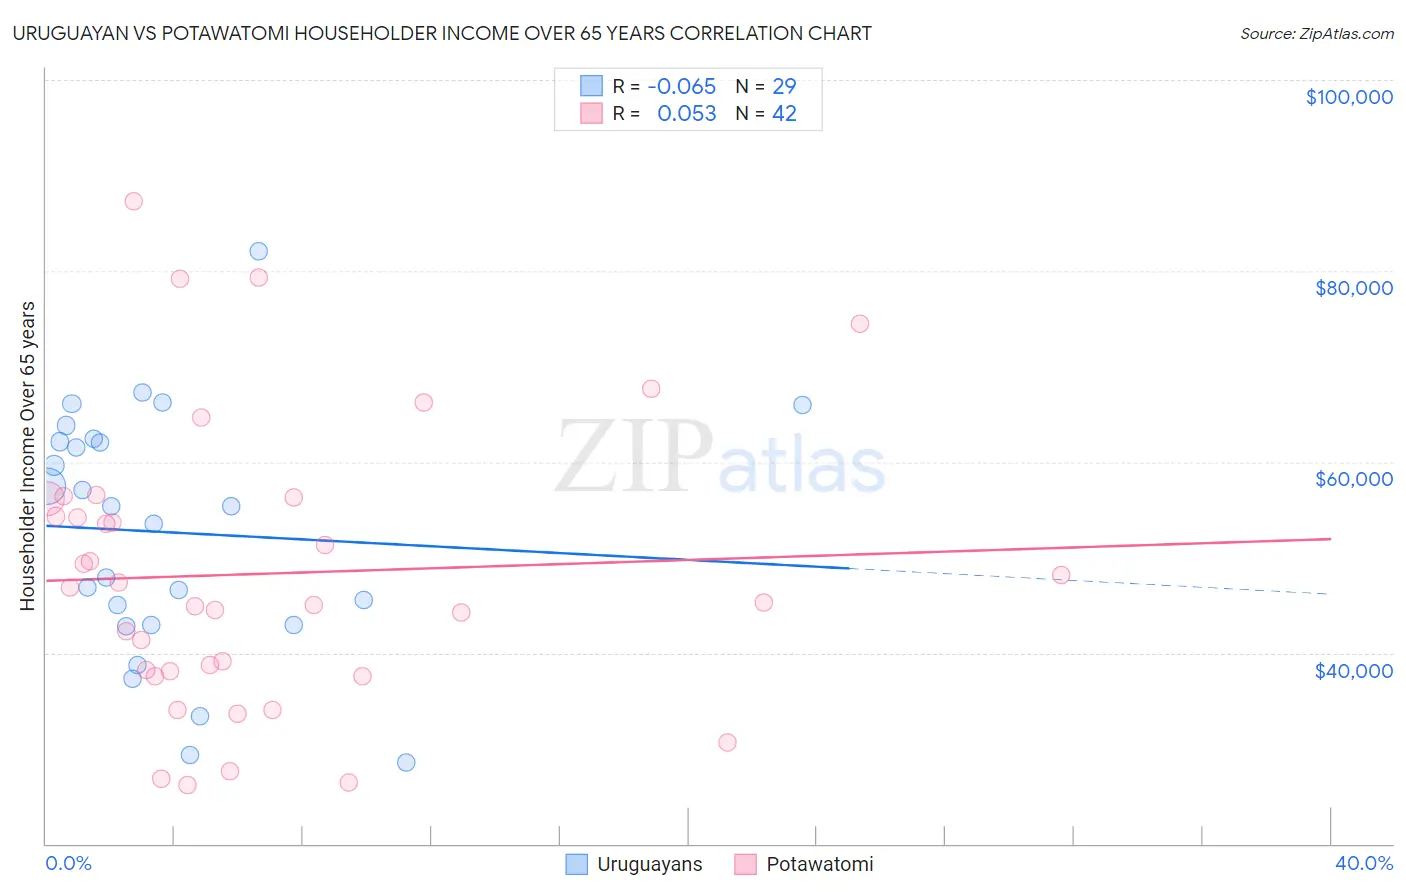 Uruguayan vs Potawatomi Householder Income Over 65 years